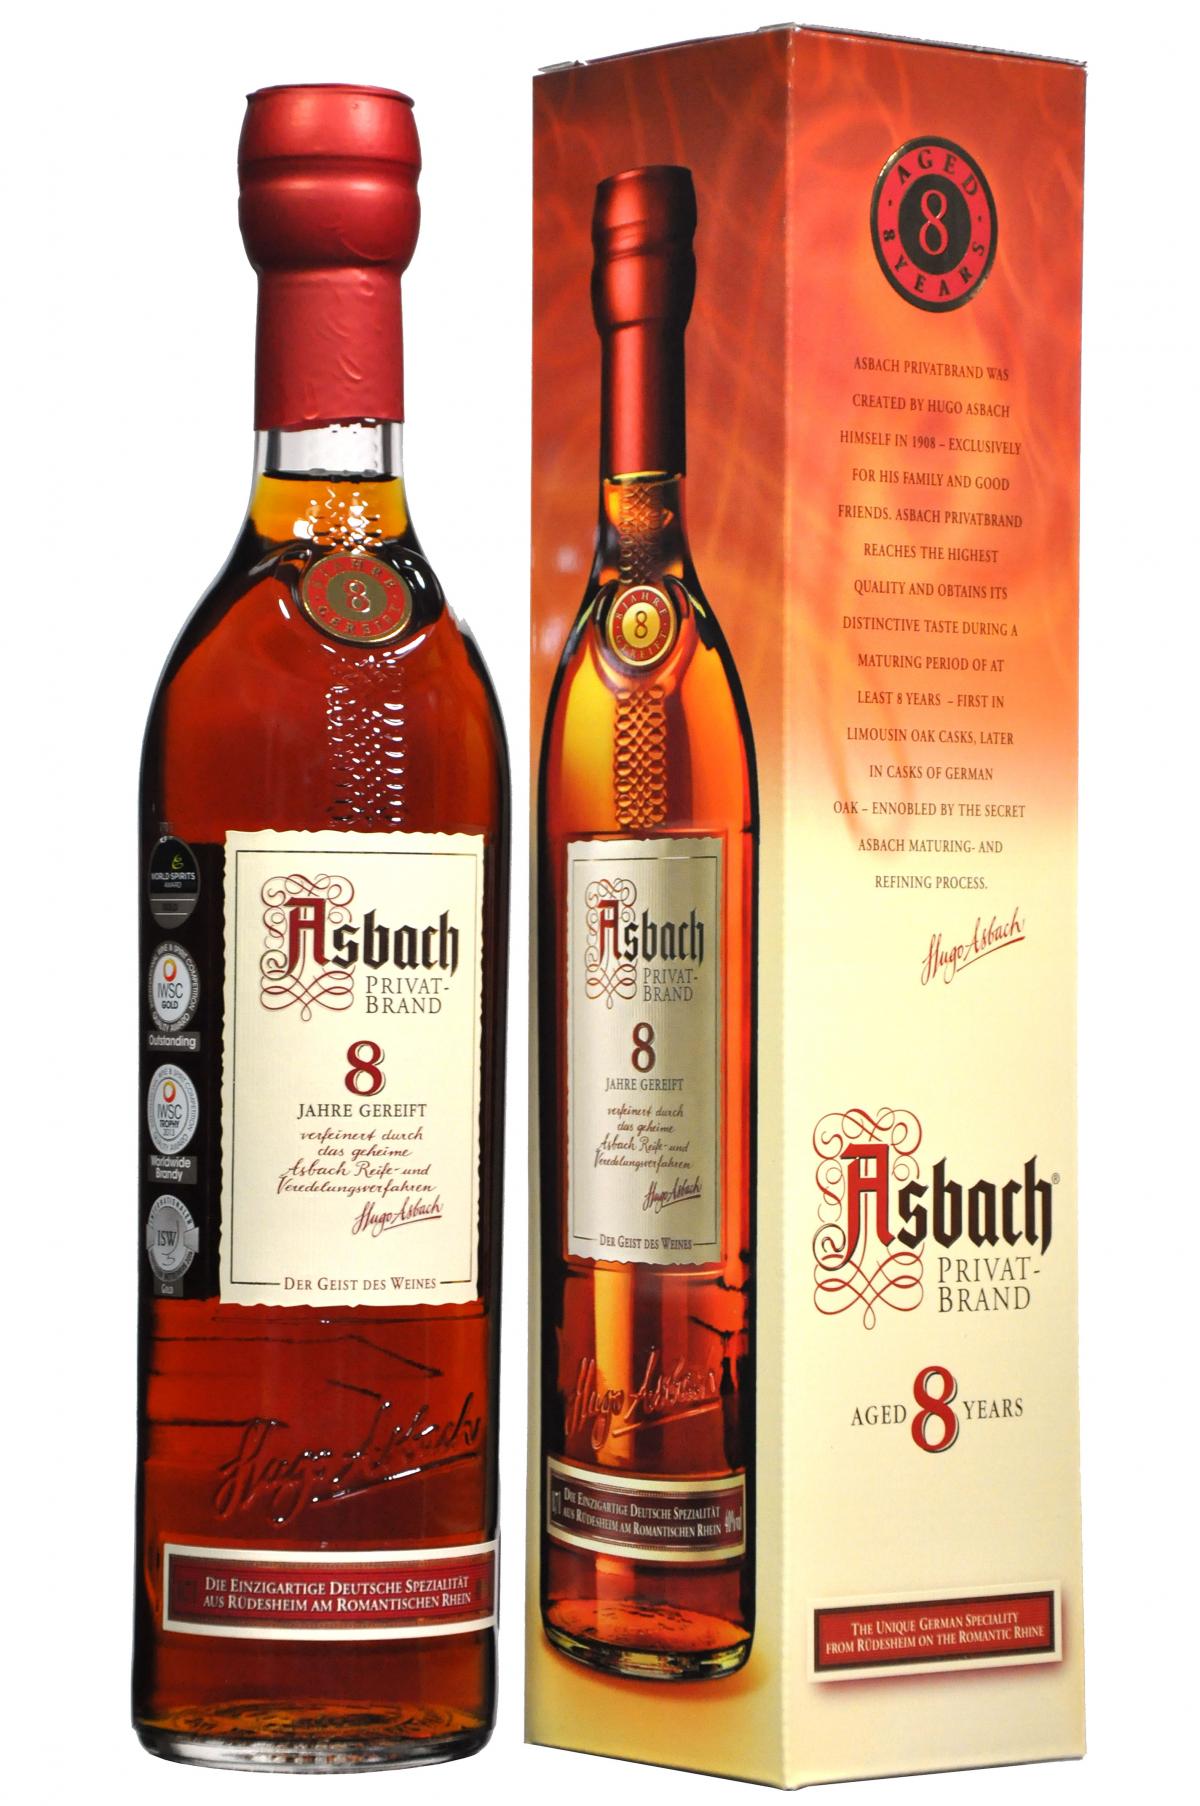 Asbach 8 Year Old Privatbrand German Brandy